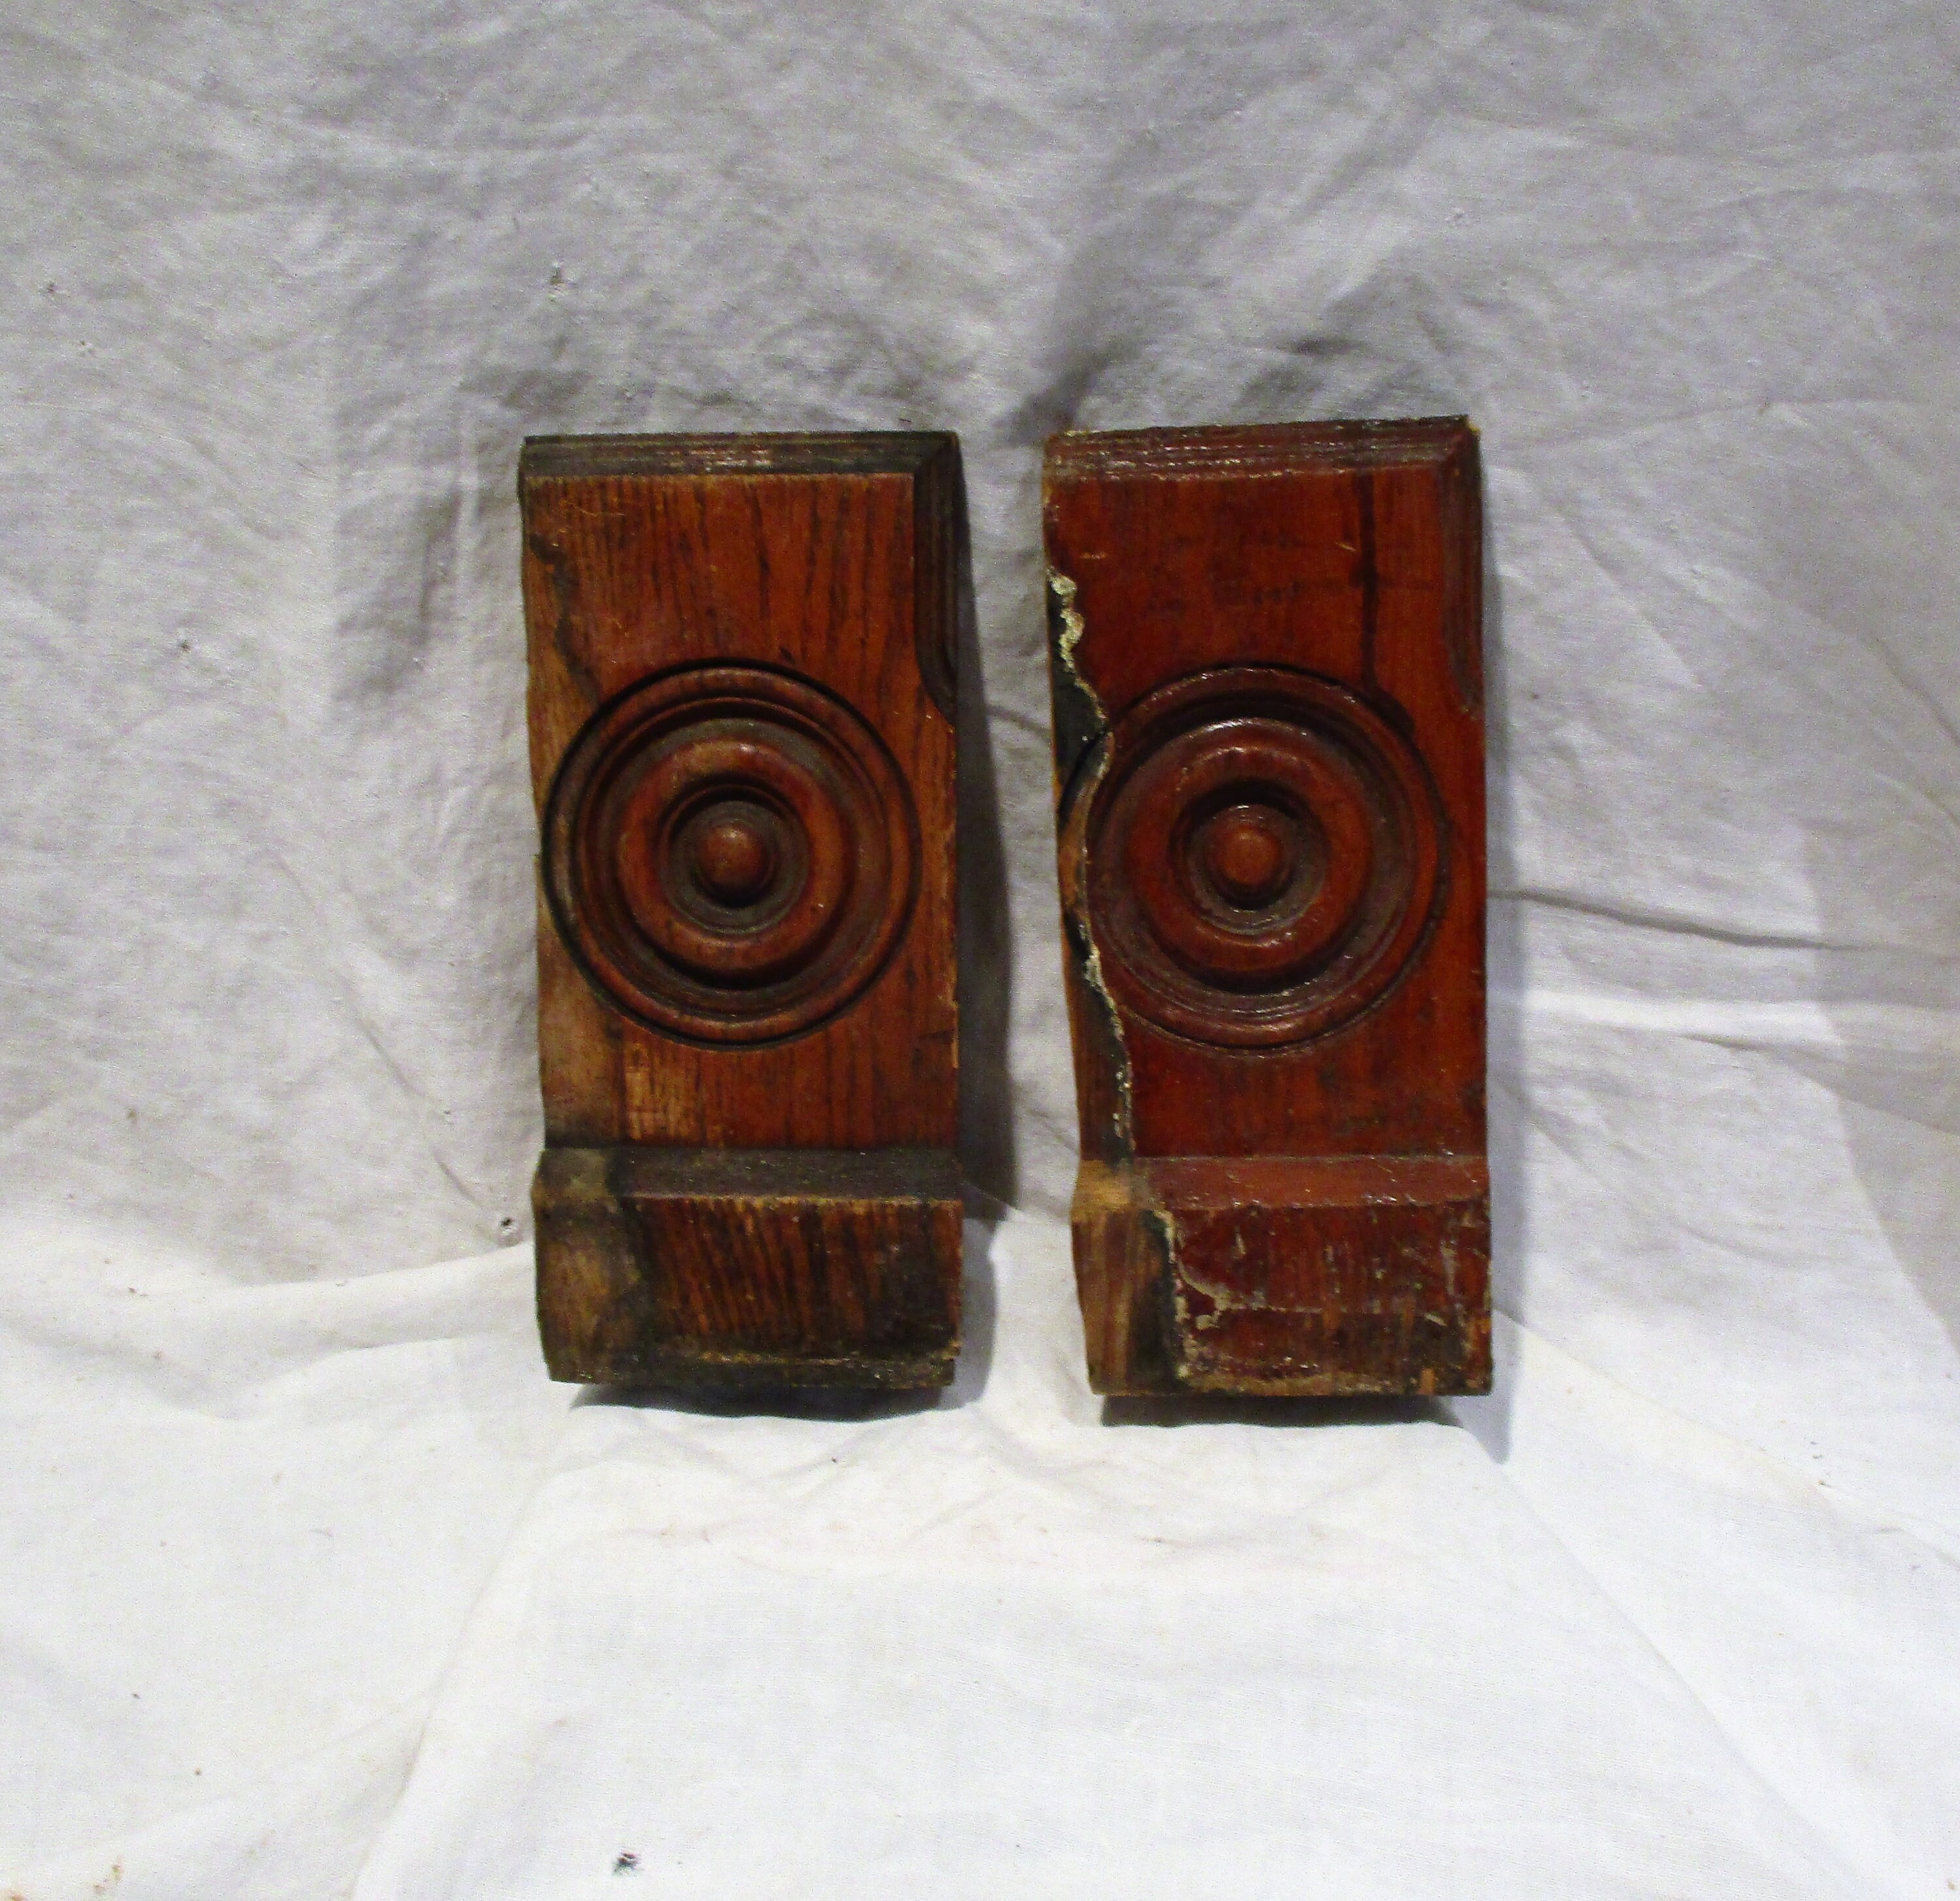 Corner Baseboard Brush - Triangular - Wooden block with 2 threaded holes -  Multi Brosses